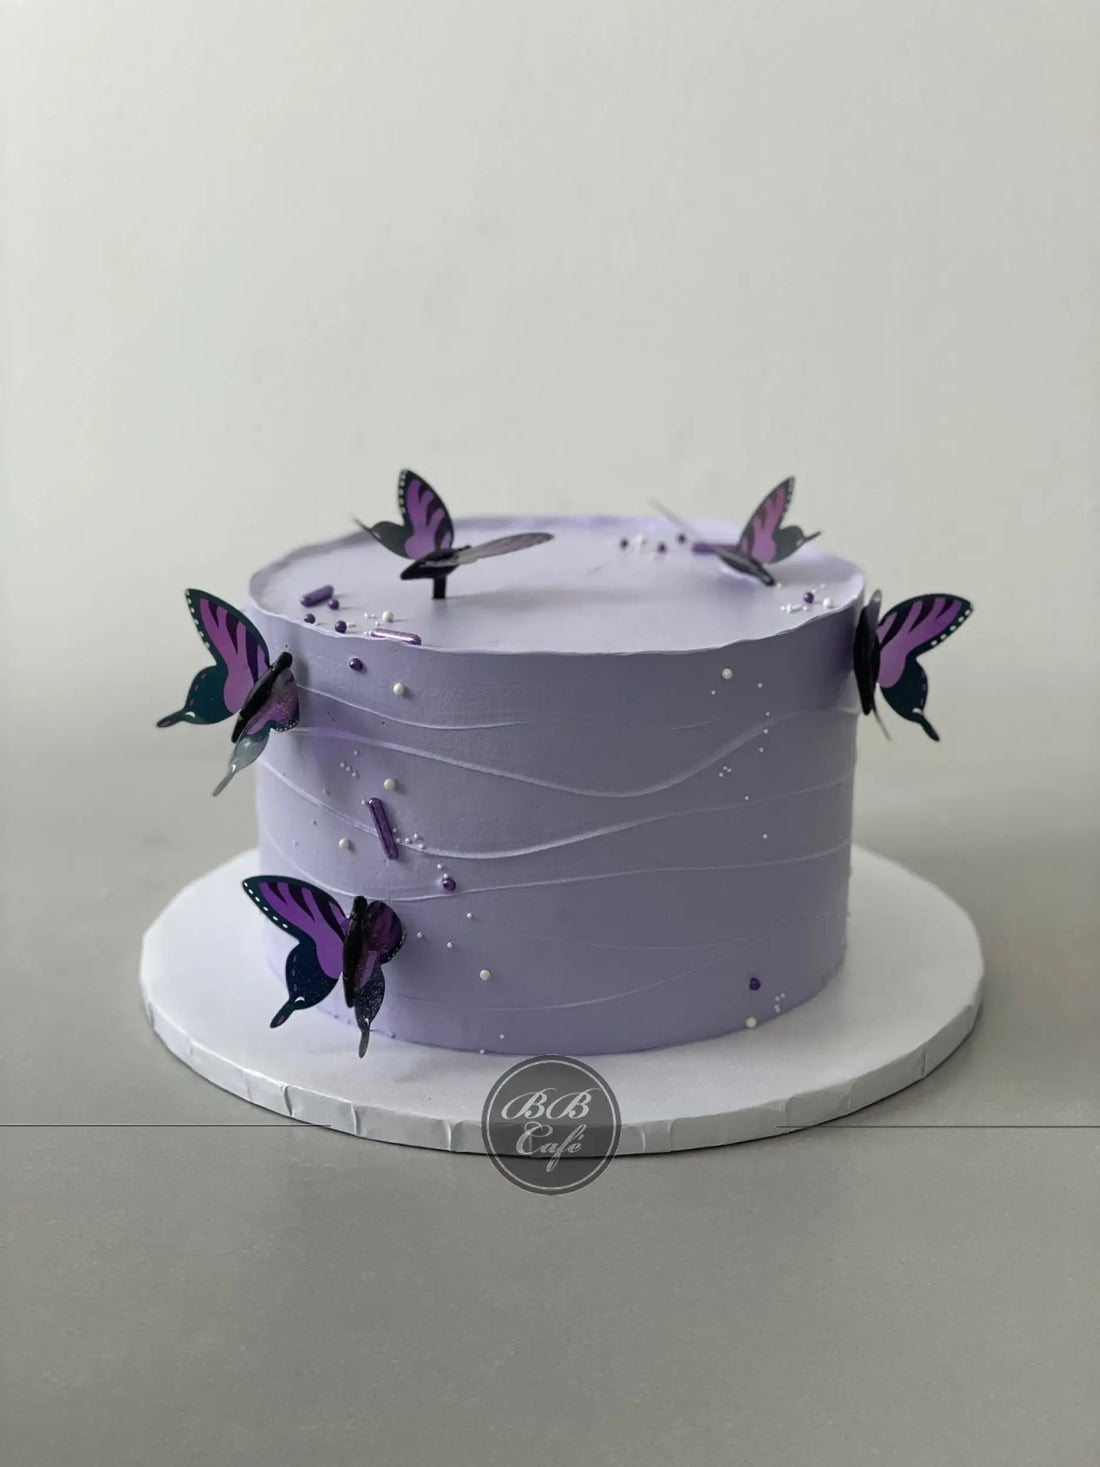 Butterfly on whipped cream - custom cake